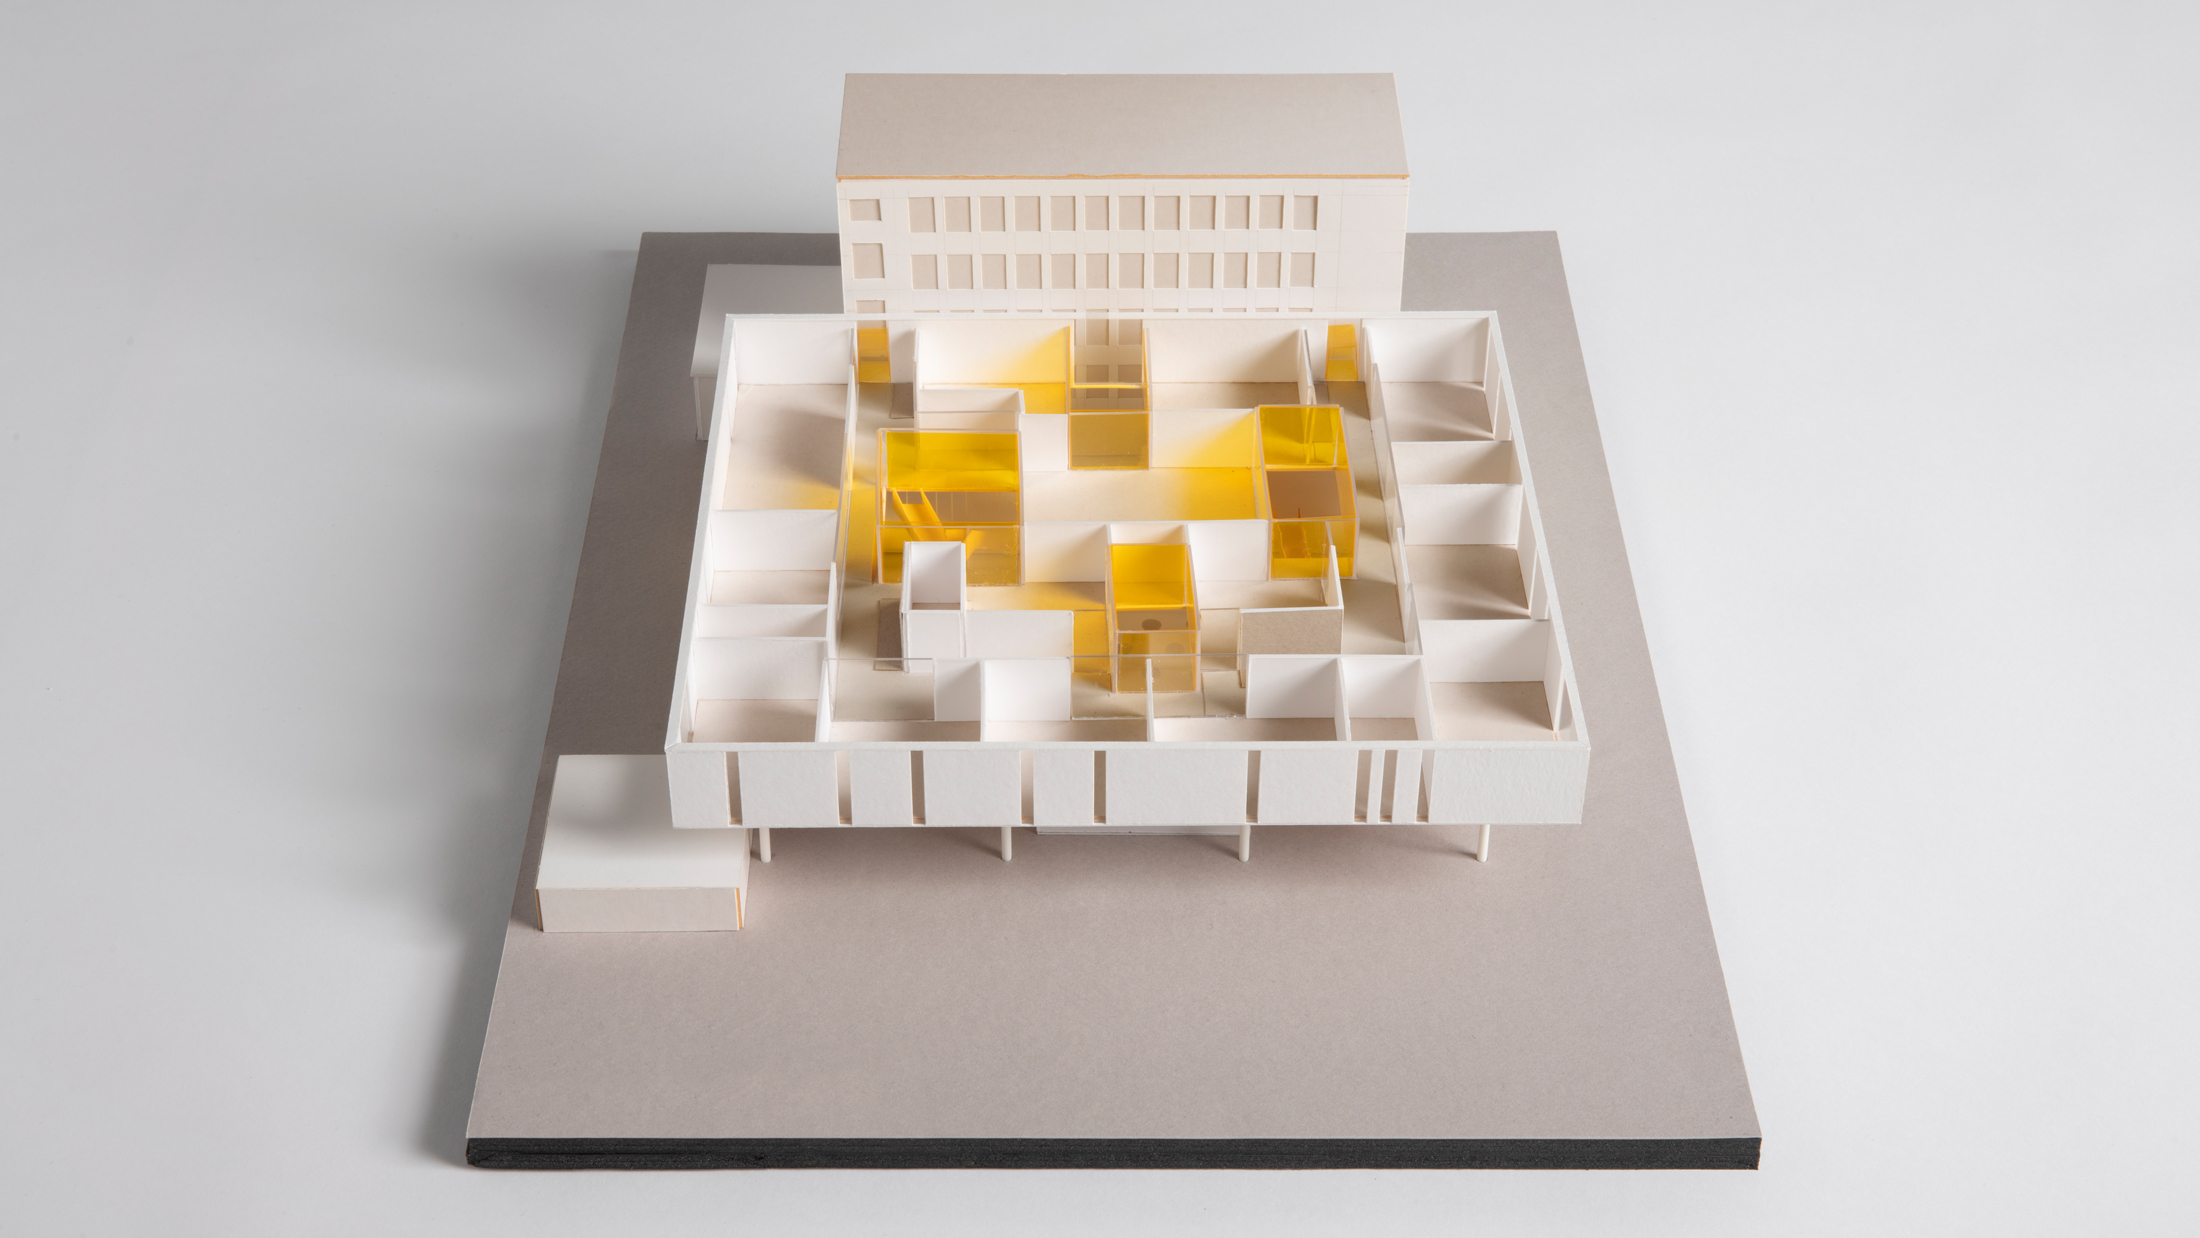 Sint Jozef Geel, designed by NOAHH | Network Oriented Architecture in collaboration with bildt.